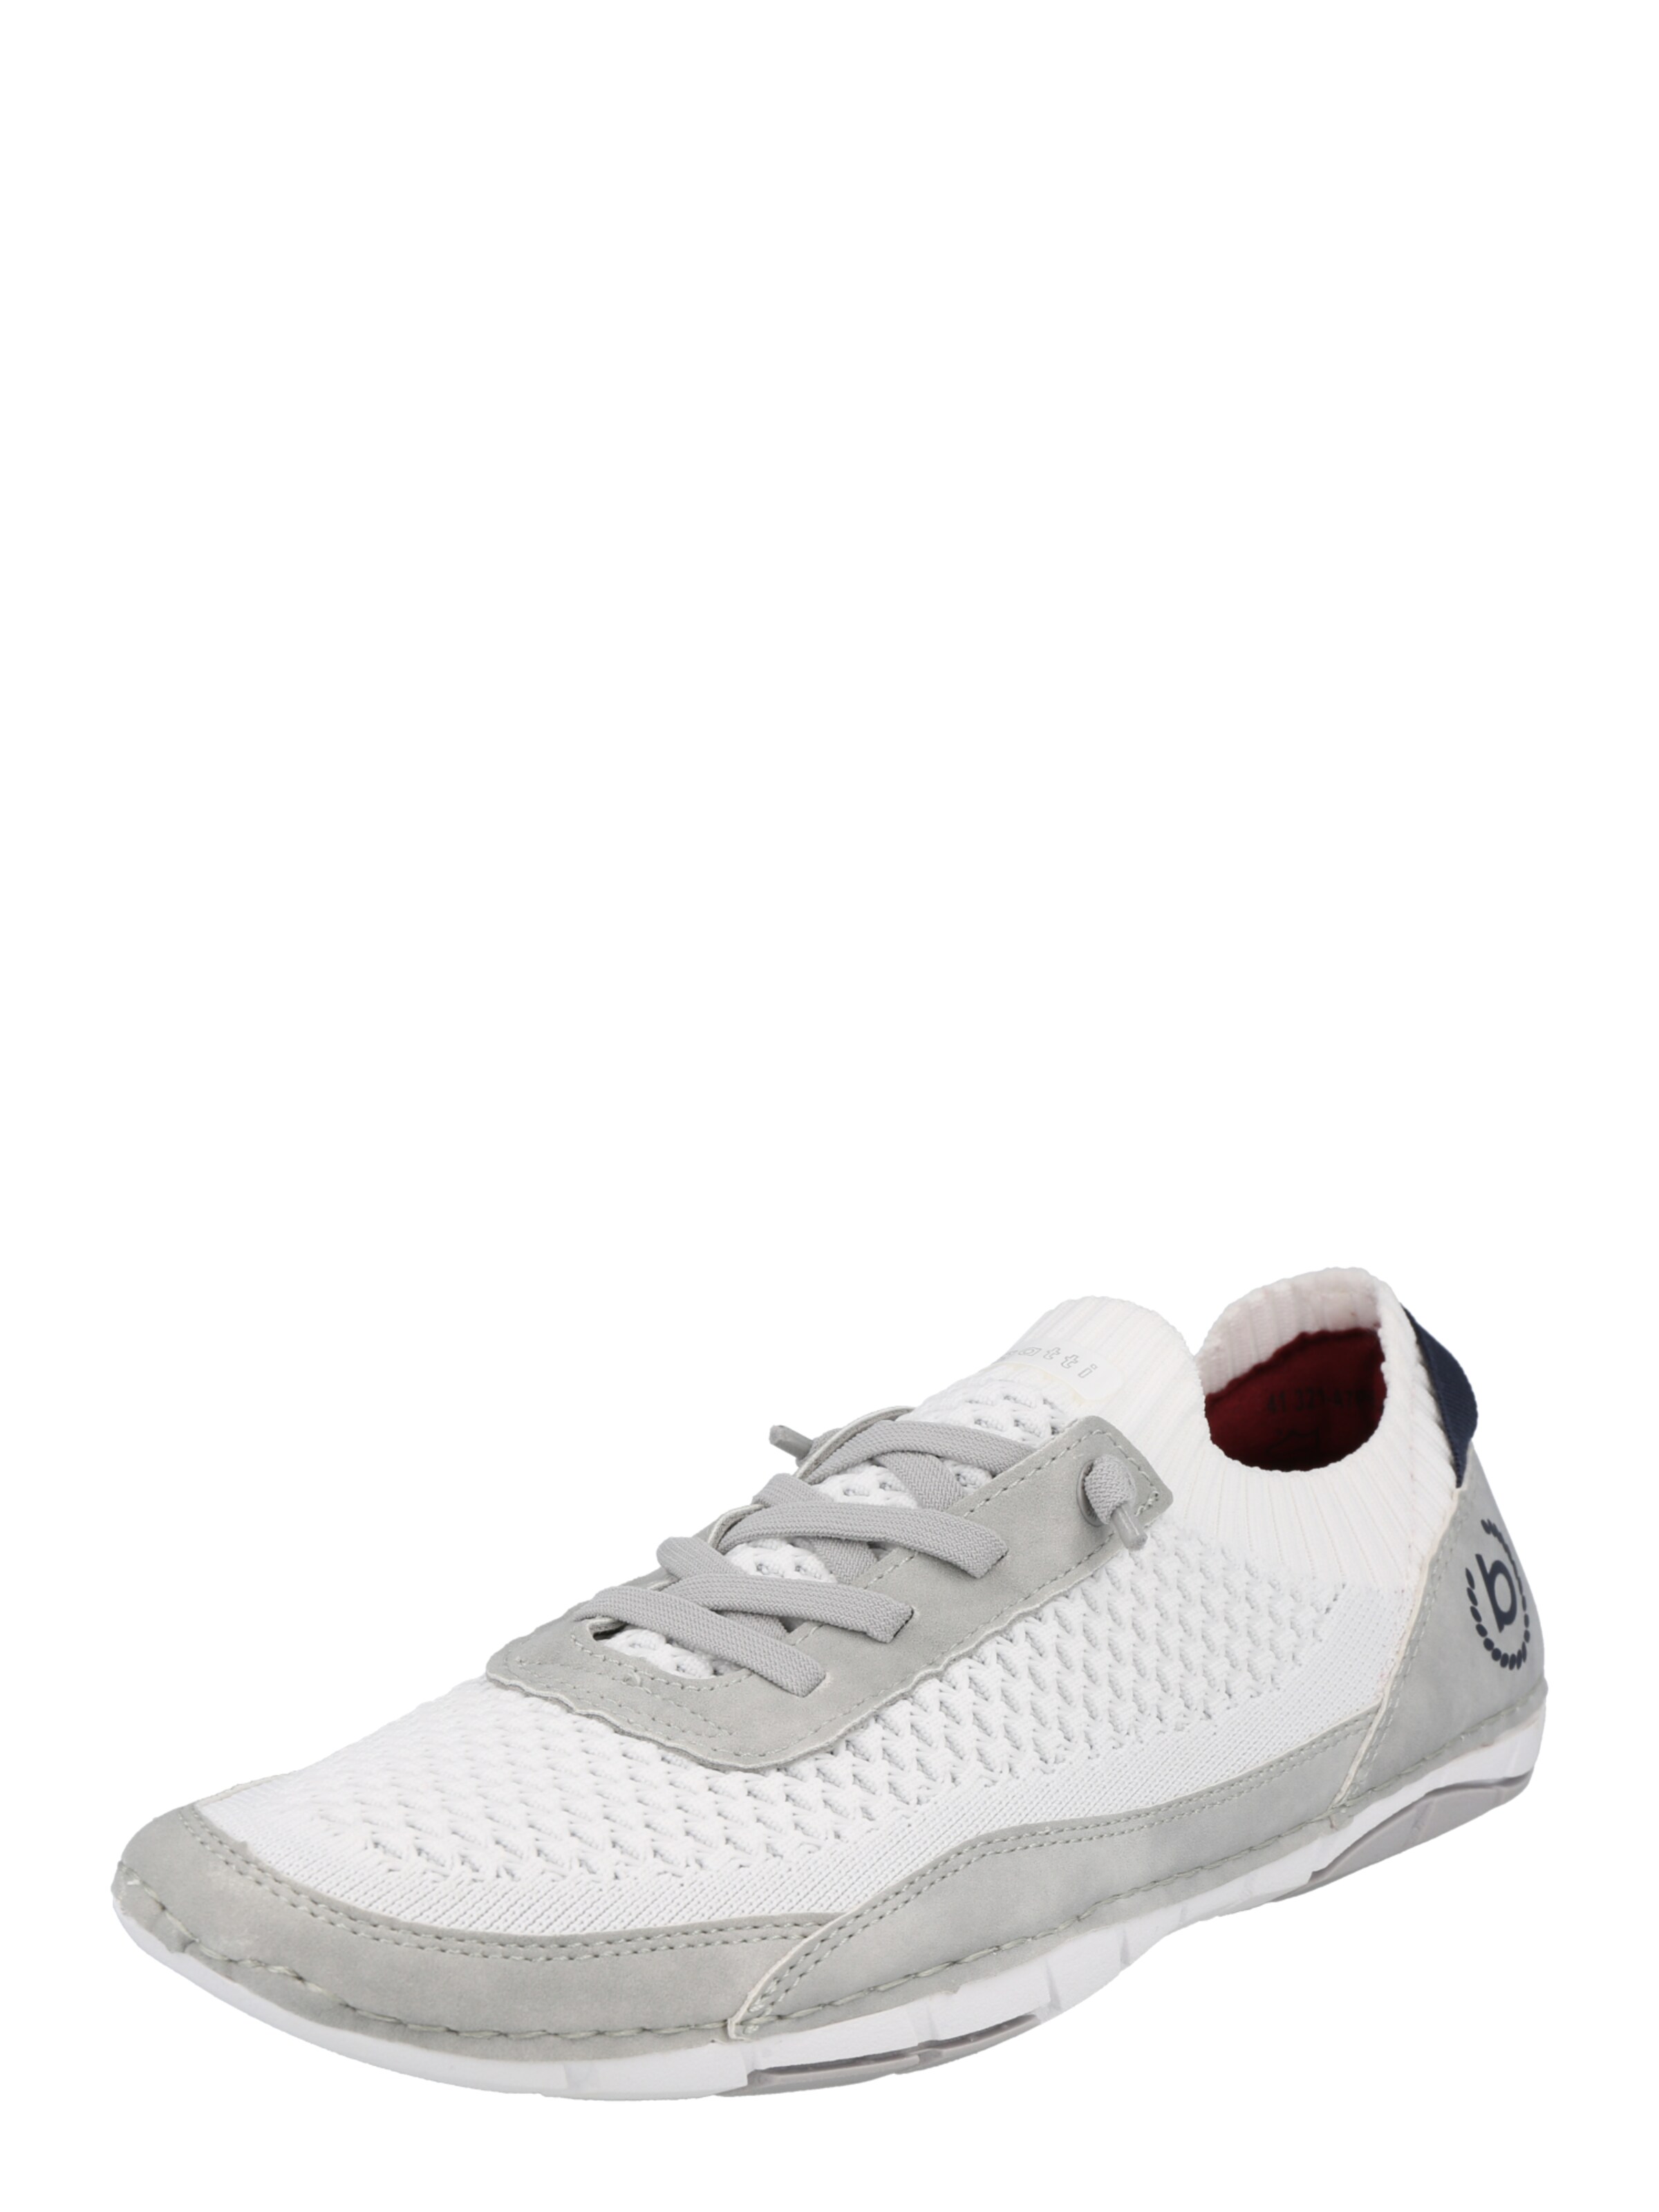 Men Sneakers | bugatti Sneakers in White - GY47513